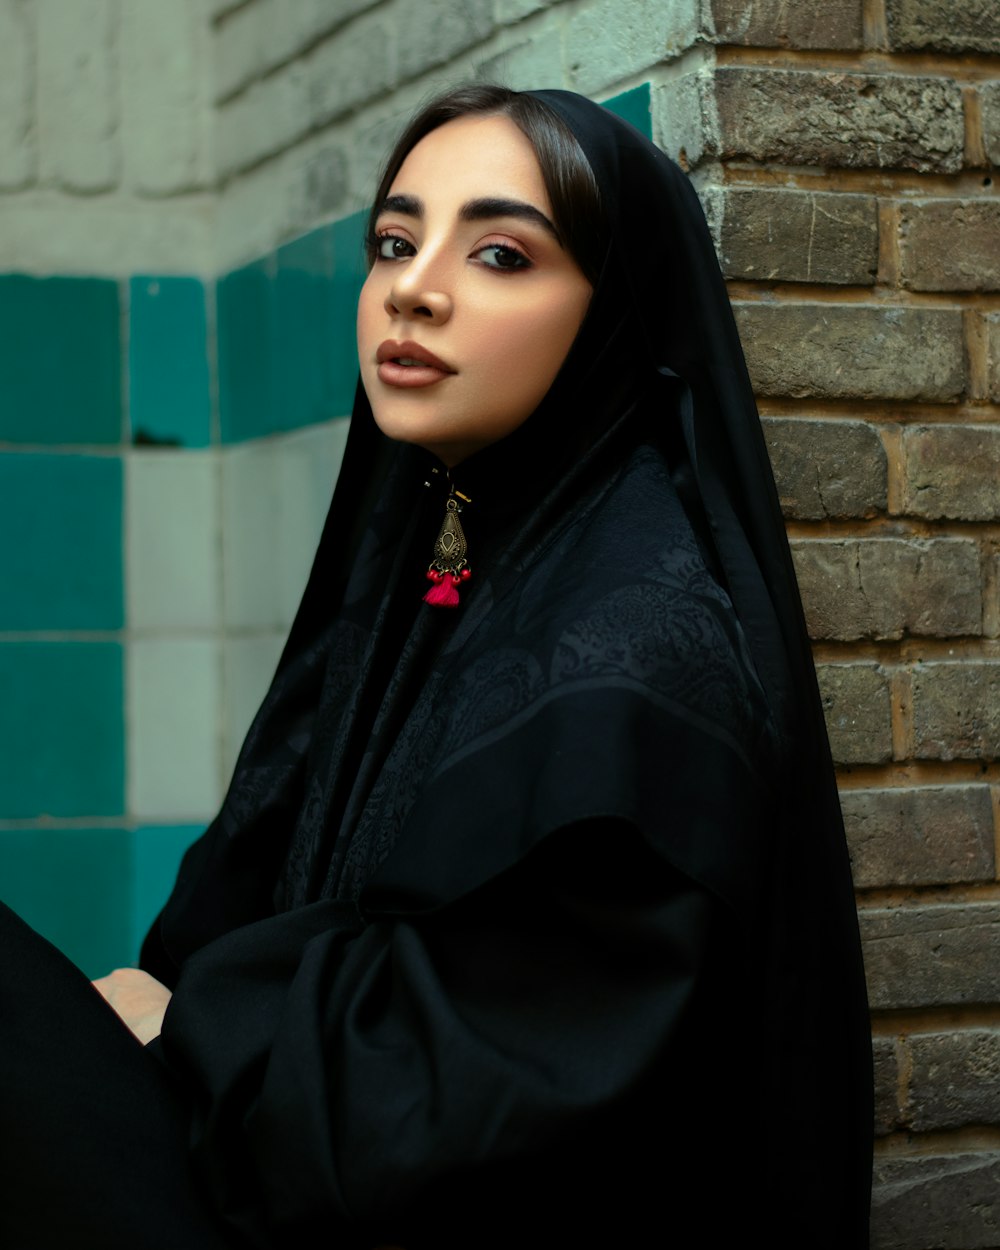 Frau in schwarzem Hijab und schwarzem langärmeligem Kleid